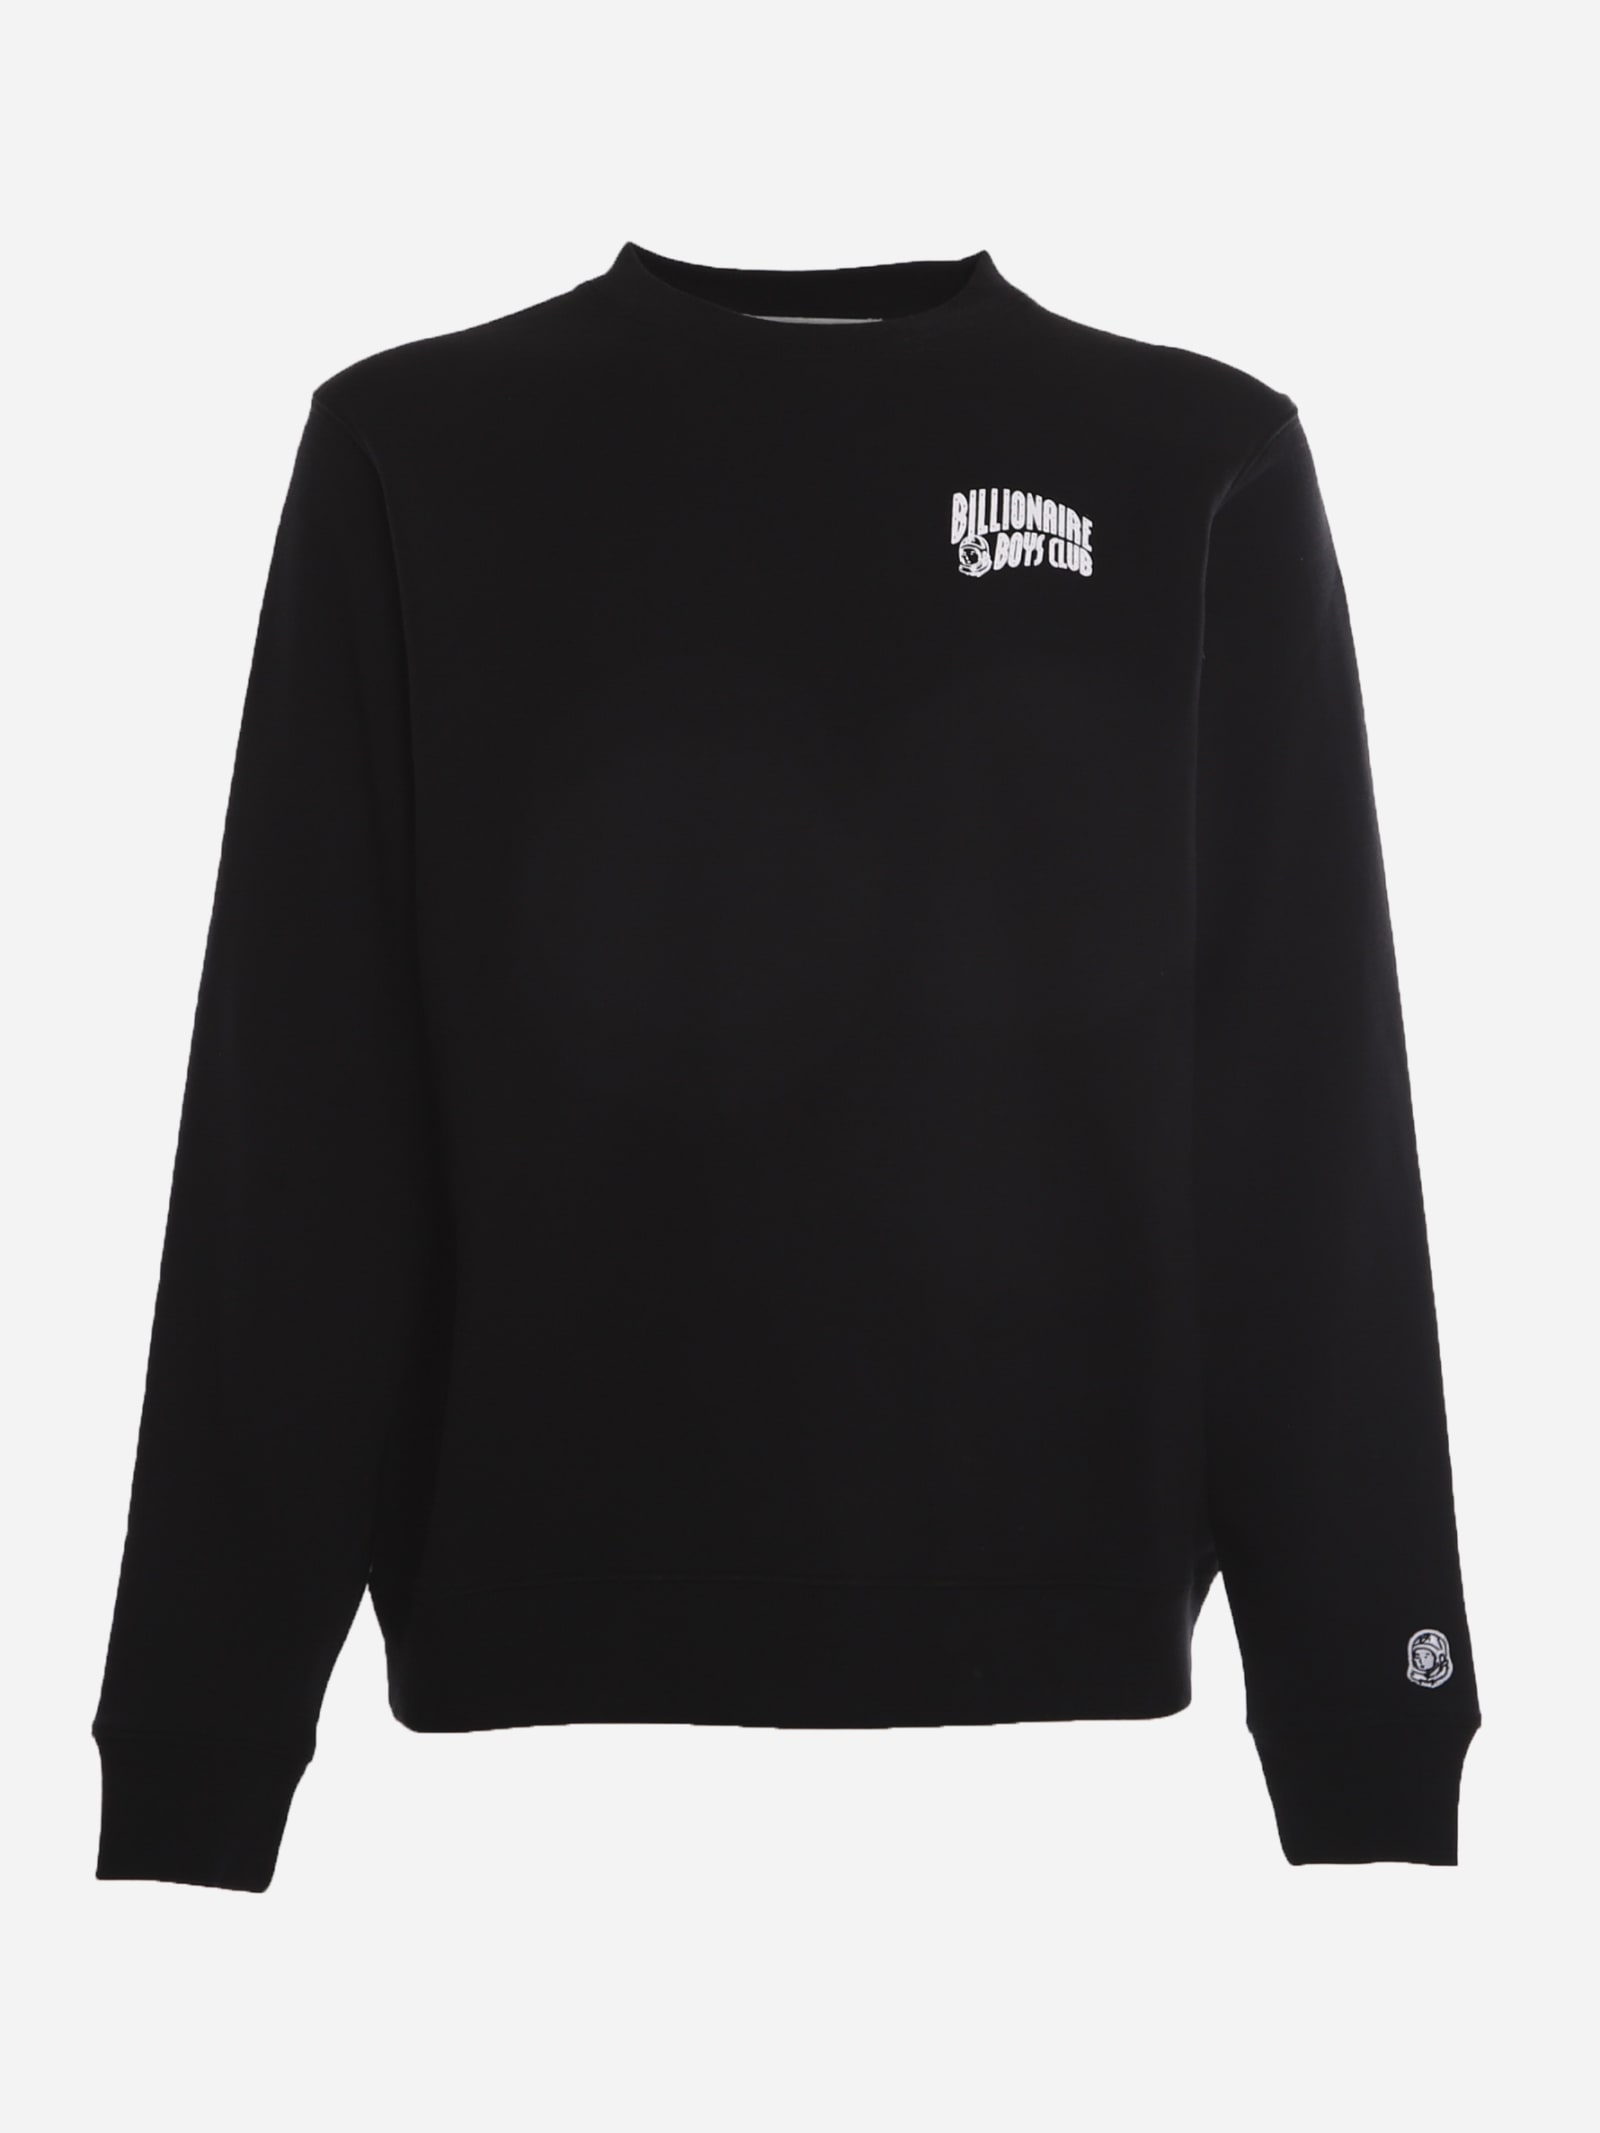 Billionaire Boys Club Cotton Sweatshirt With Contrasting Logo Print